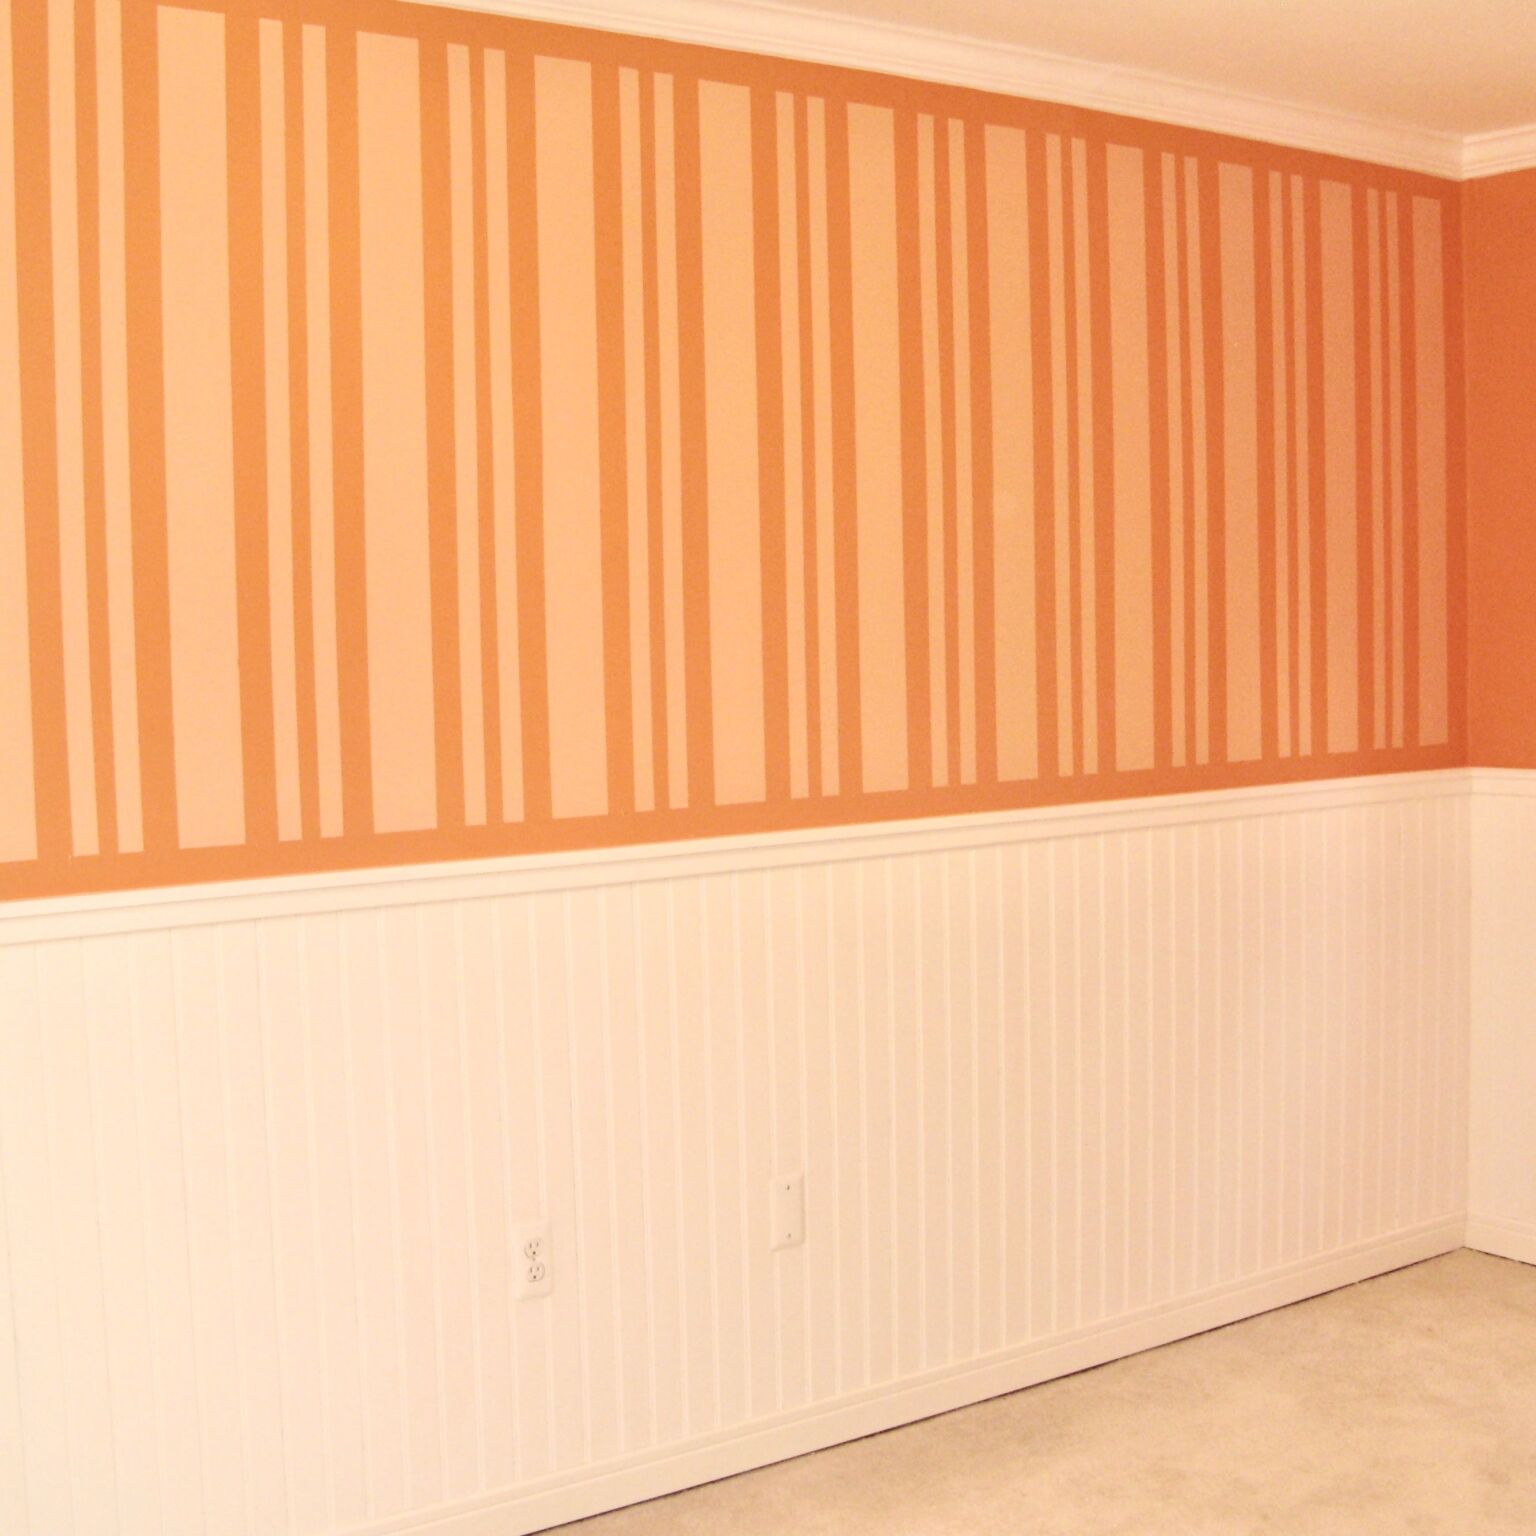 MyFixItLife_drywall alteratives Heise-Nursery-After-beadboard-orange-stripes-1536x1536